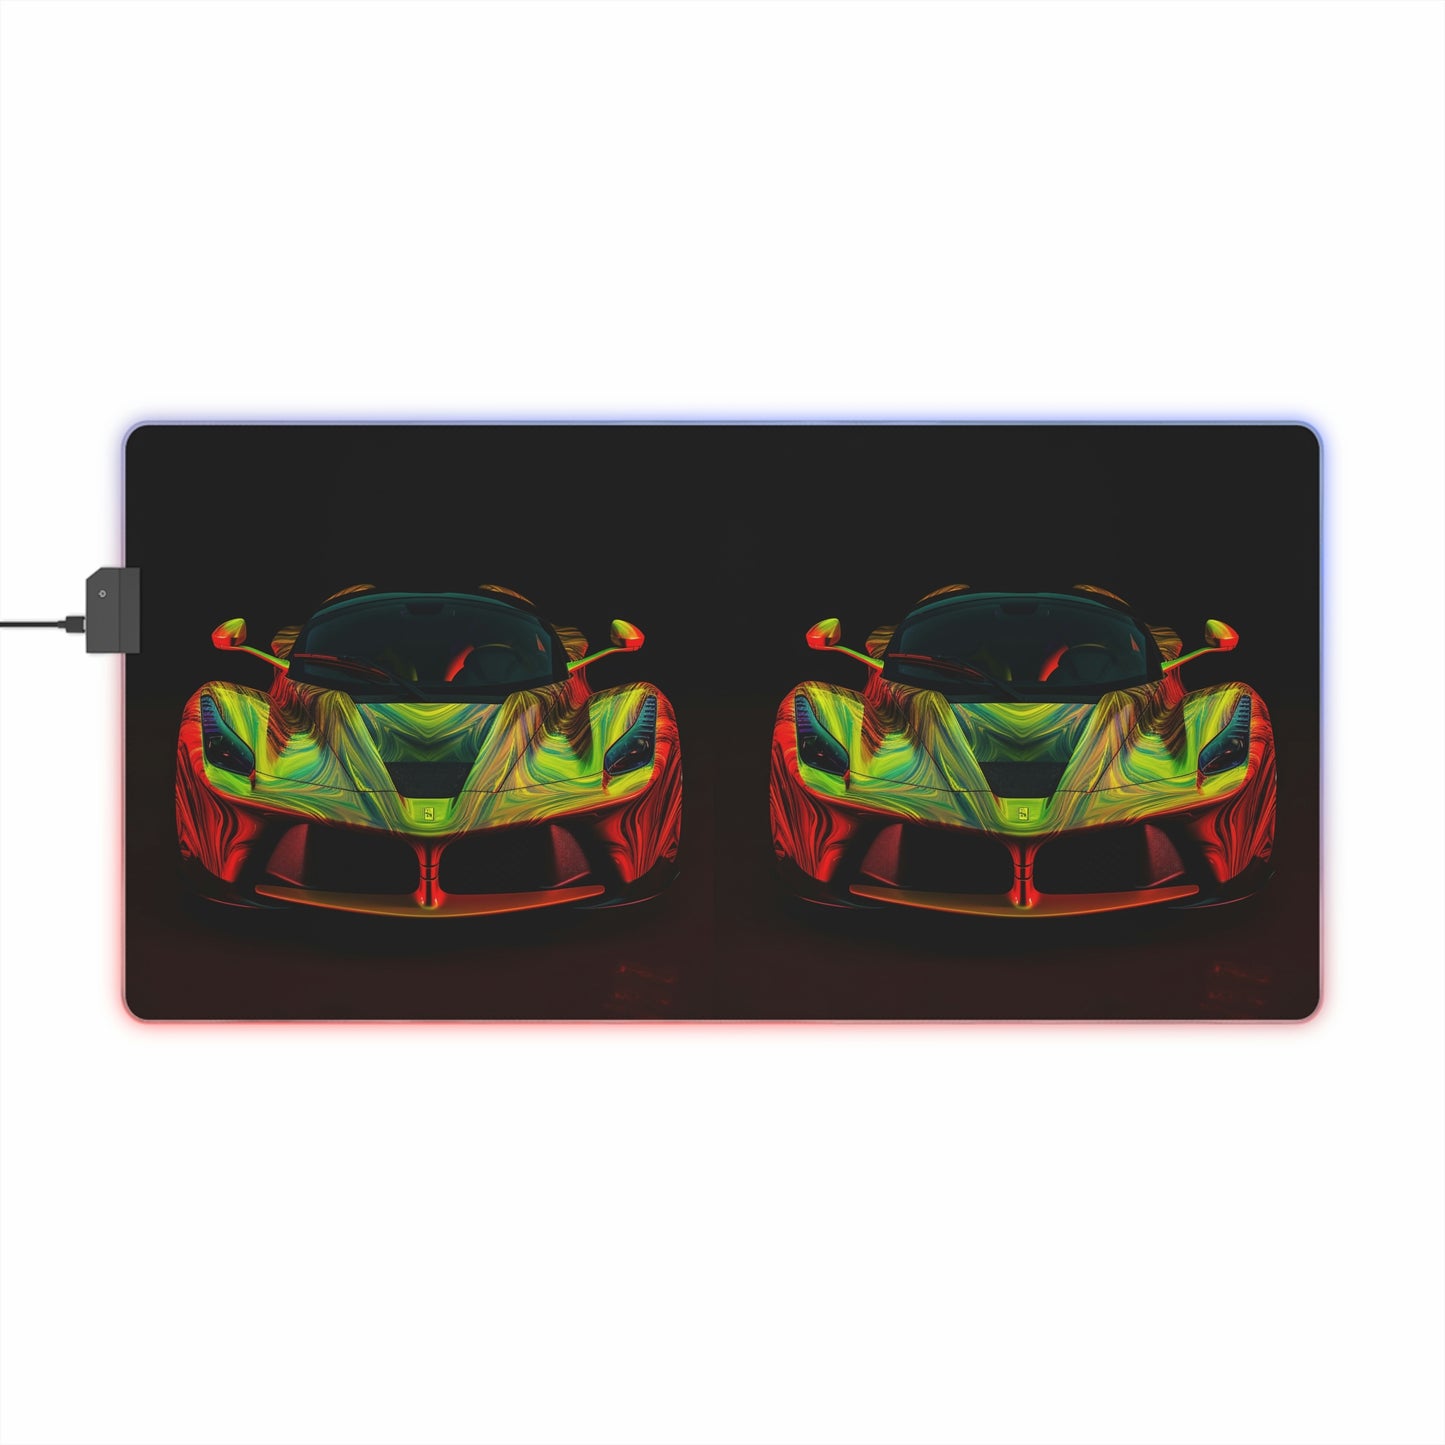 LED Gaming Mouse Pad Ferrari Neon 1